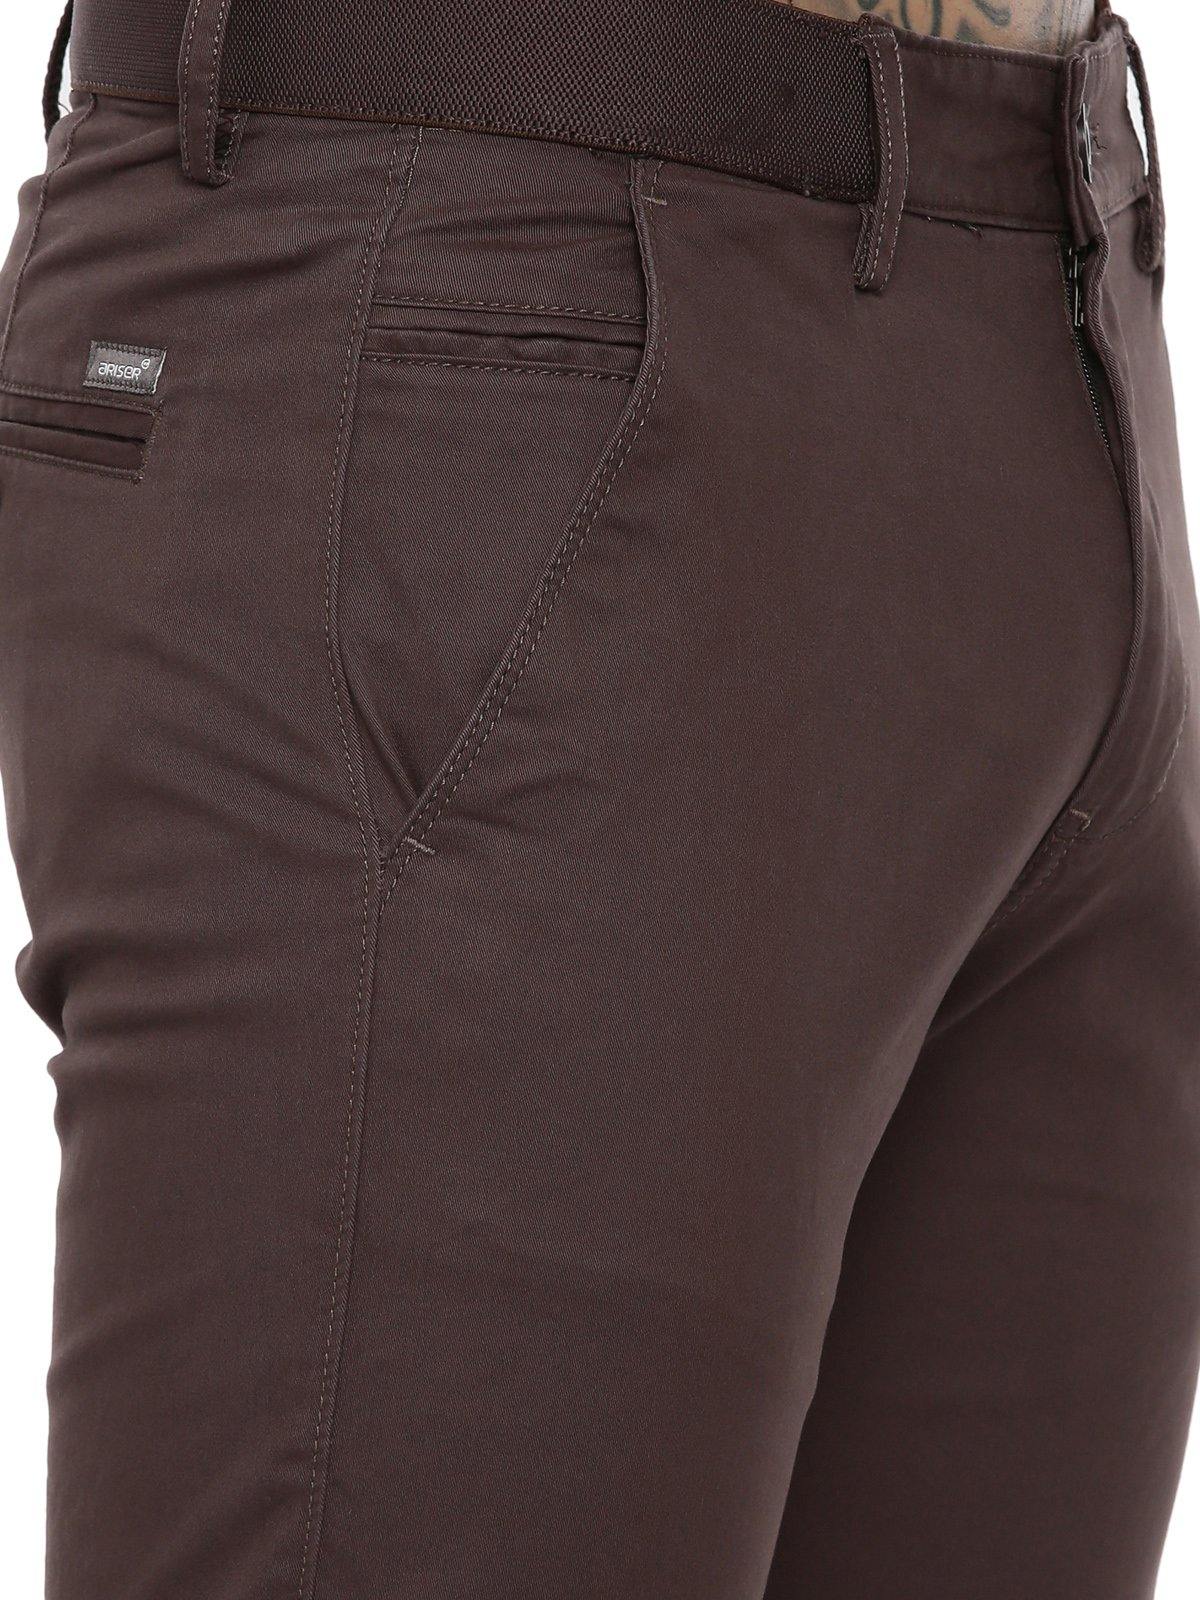 Ryan Gosling's Dark Brown Trousers | Styleforum